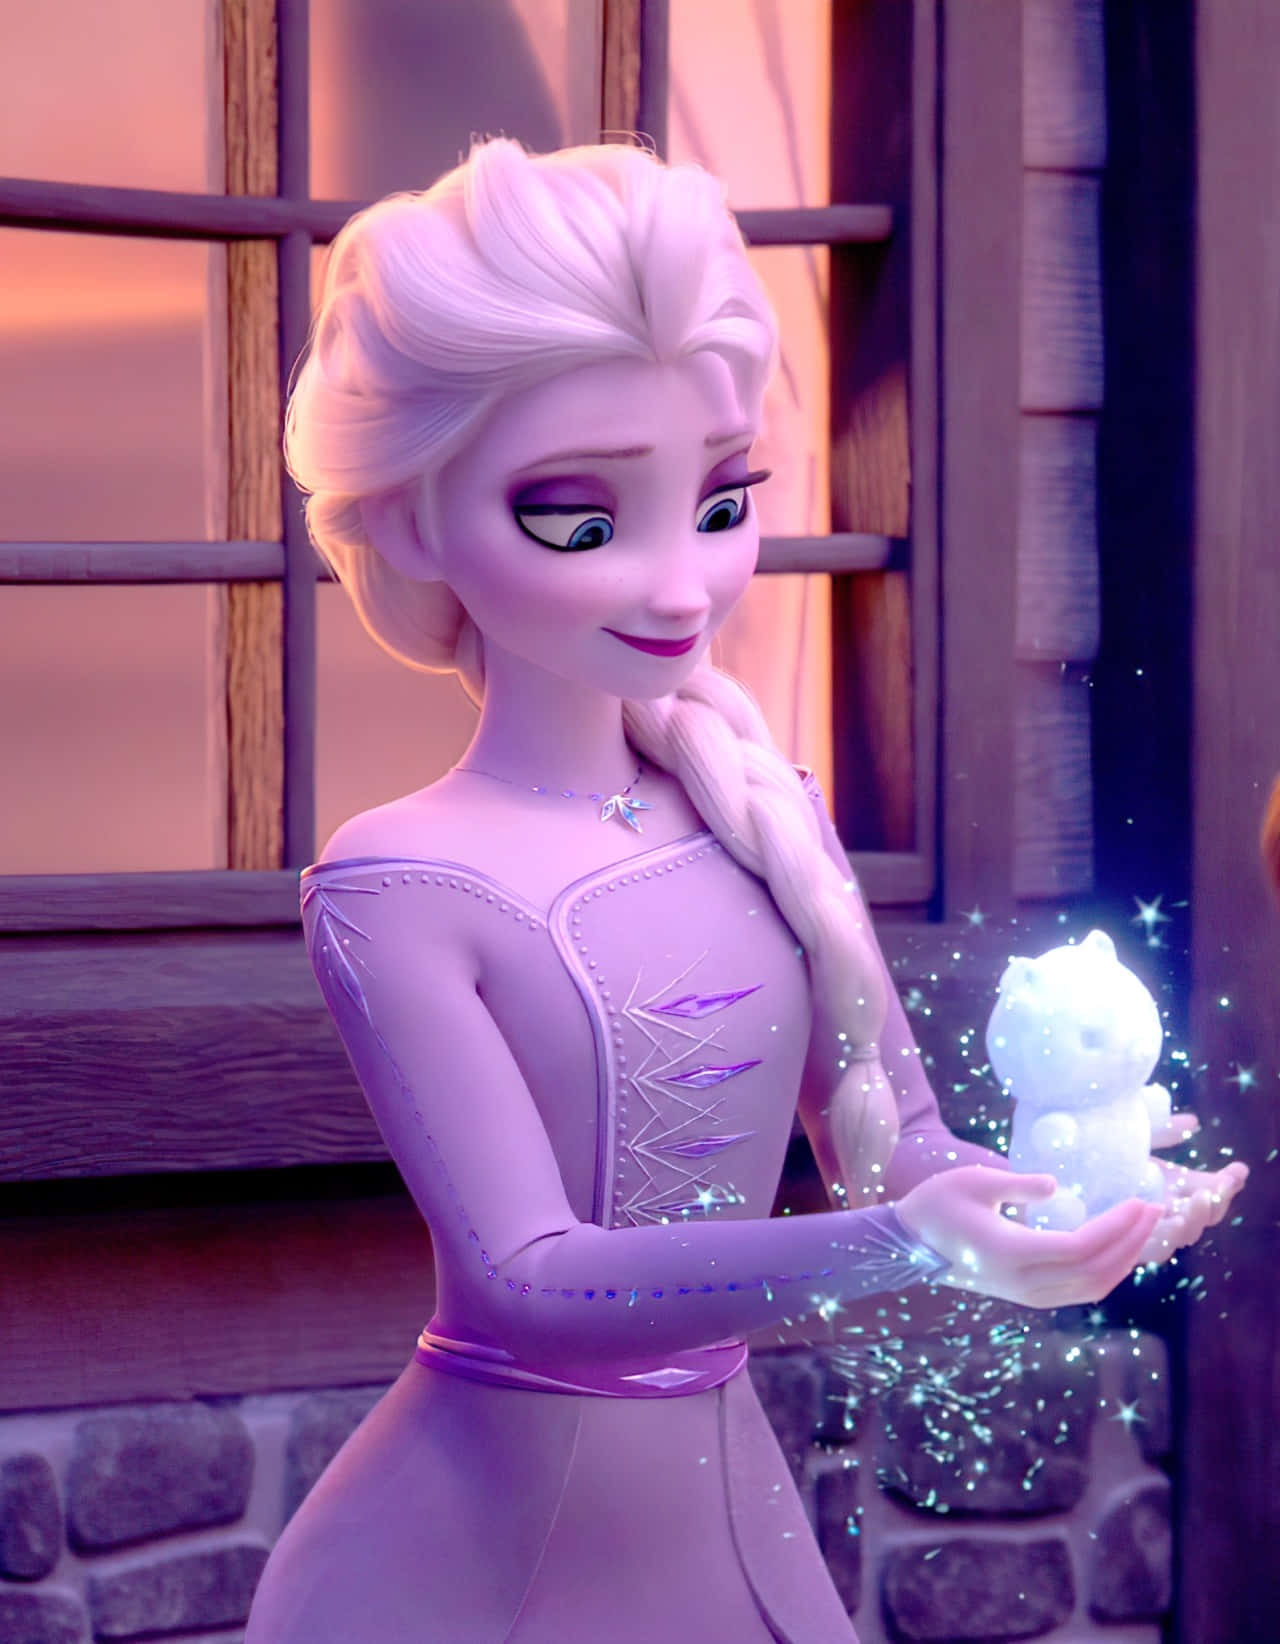 "Let it Go!" - Elsa